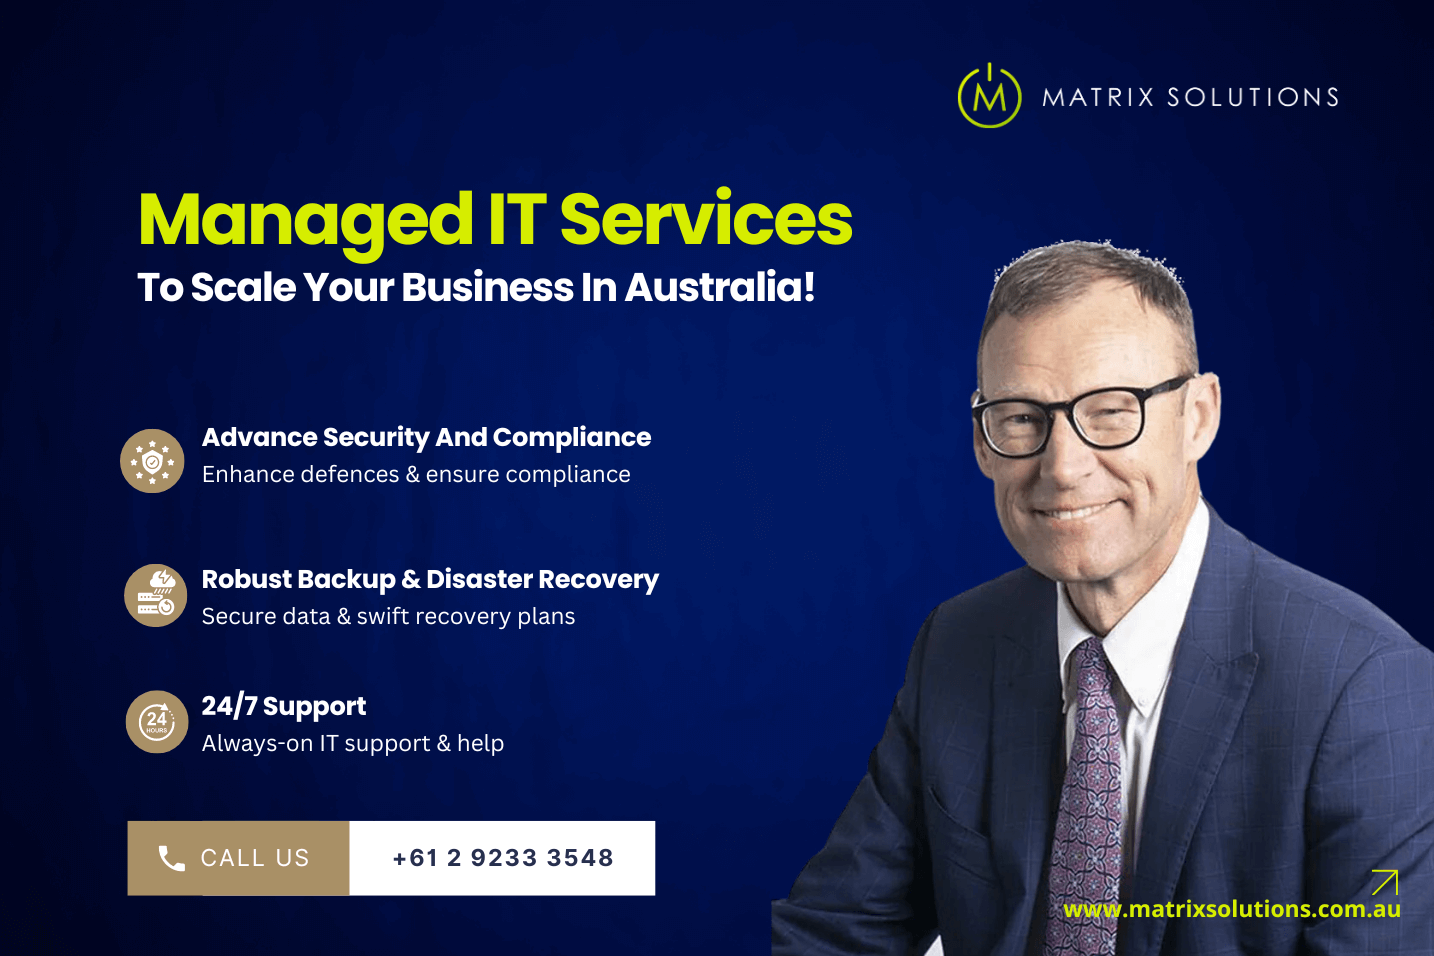 Managed IT Services Australia